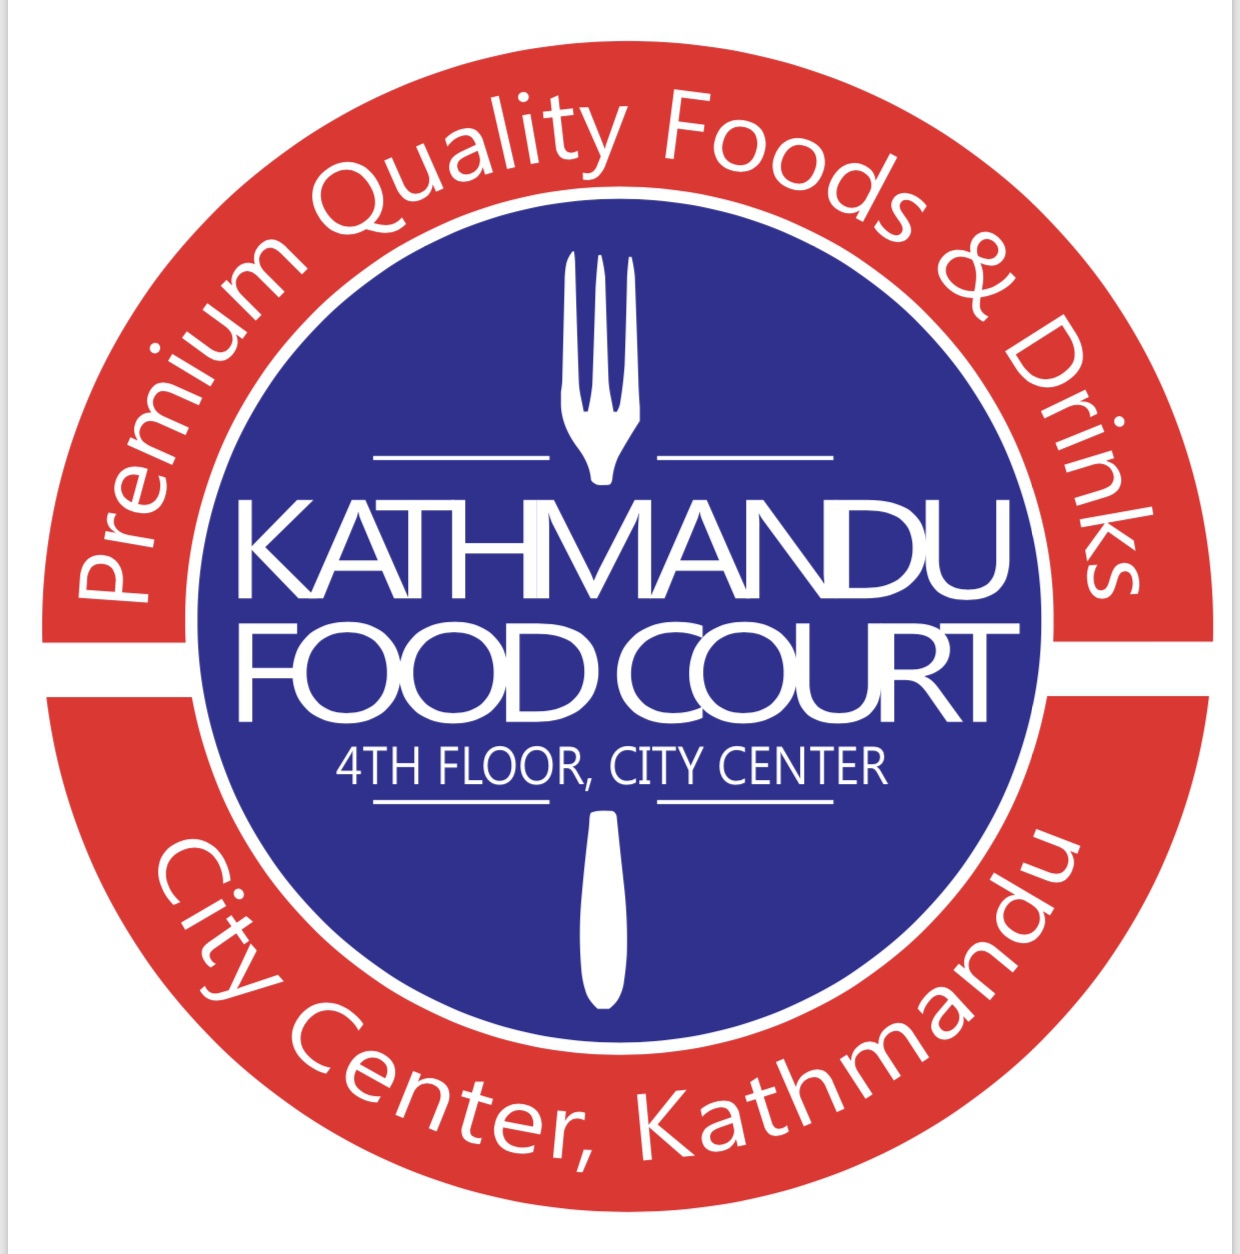 Kathmandu FoodCourt City Center